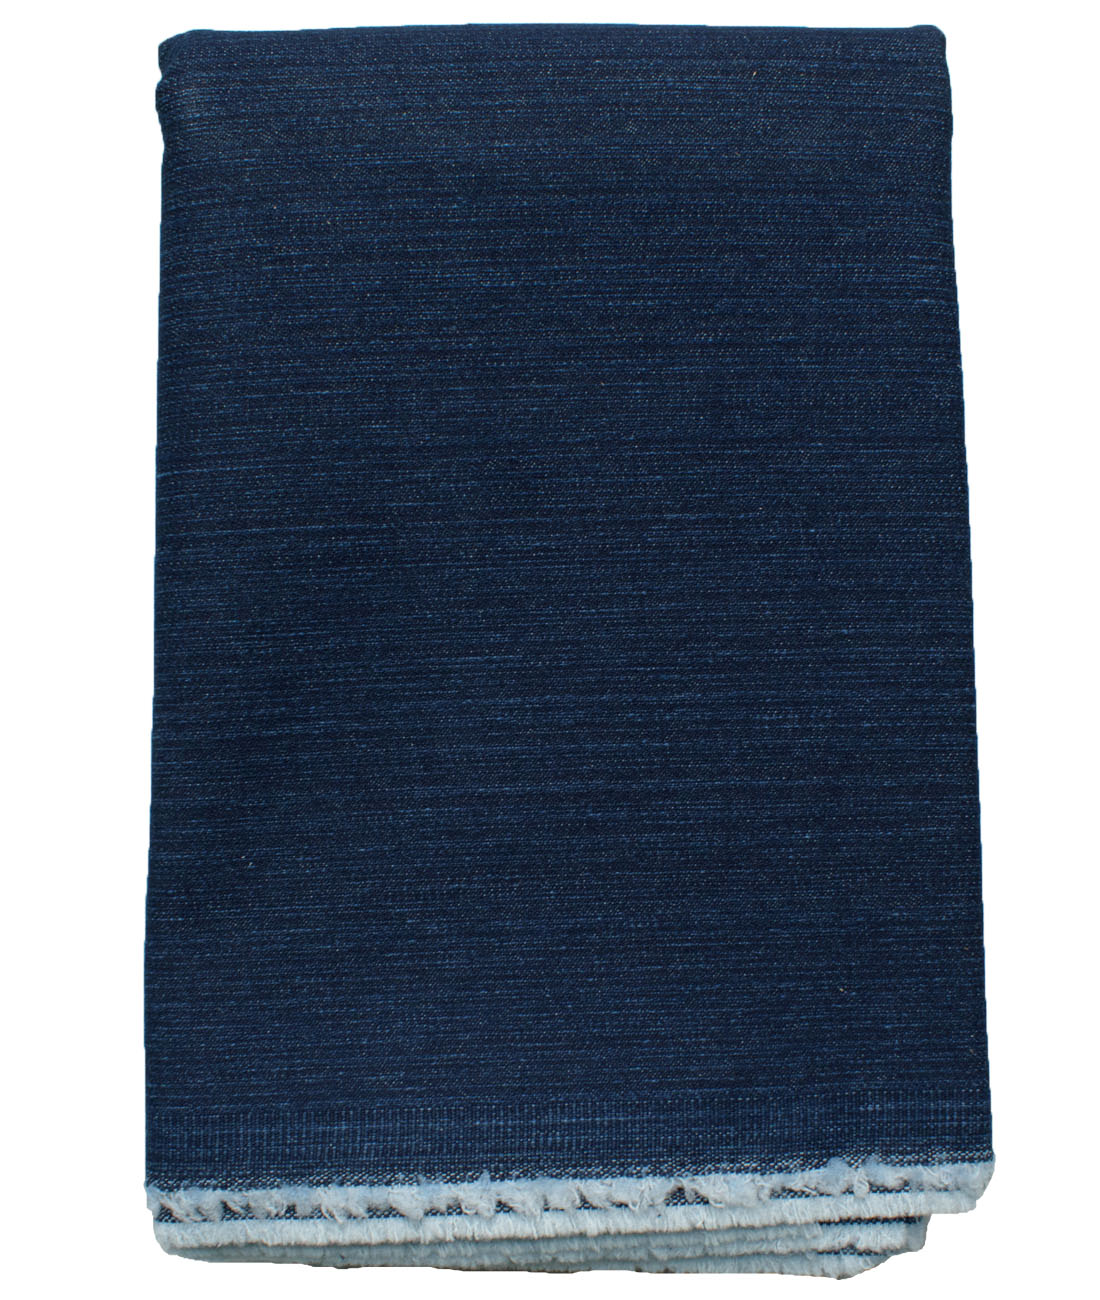 Arvind Men's Cotton Solids Unstitched Stretchable Jeans Fabric (Dark ...